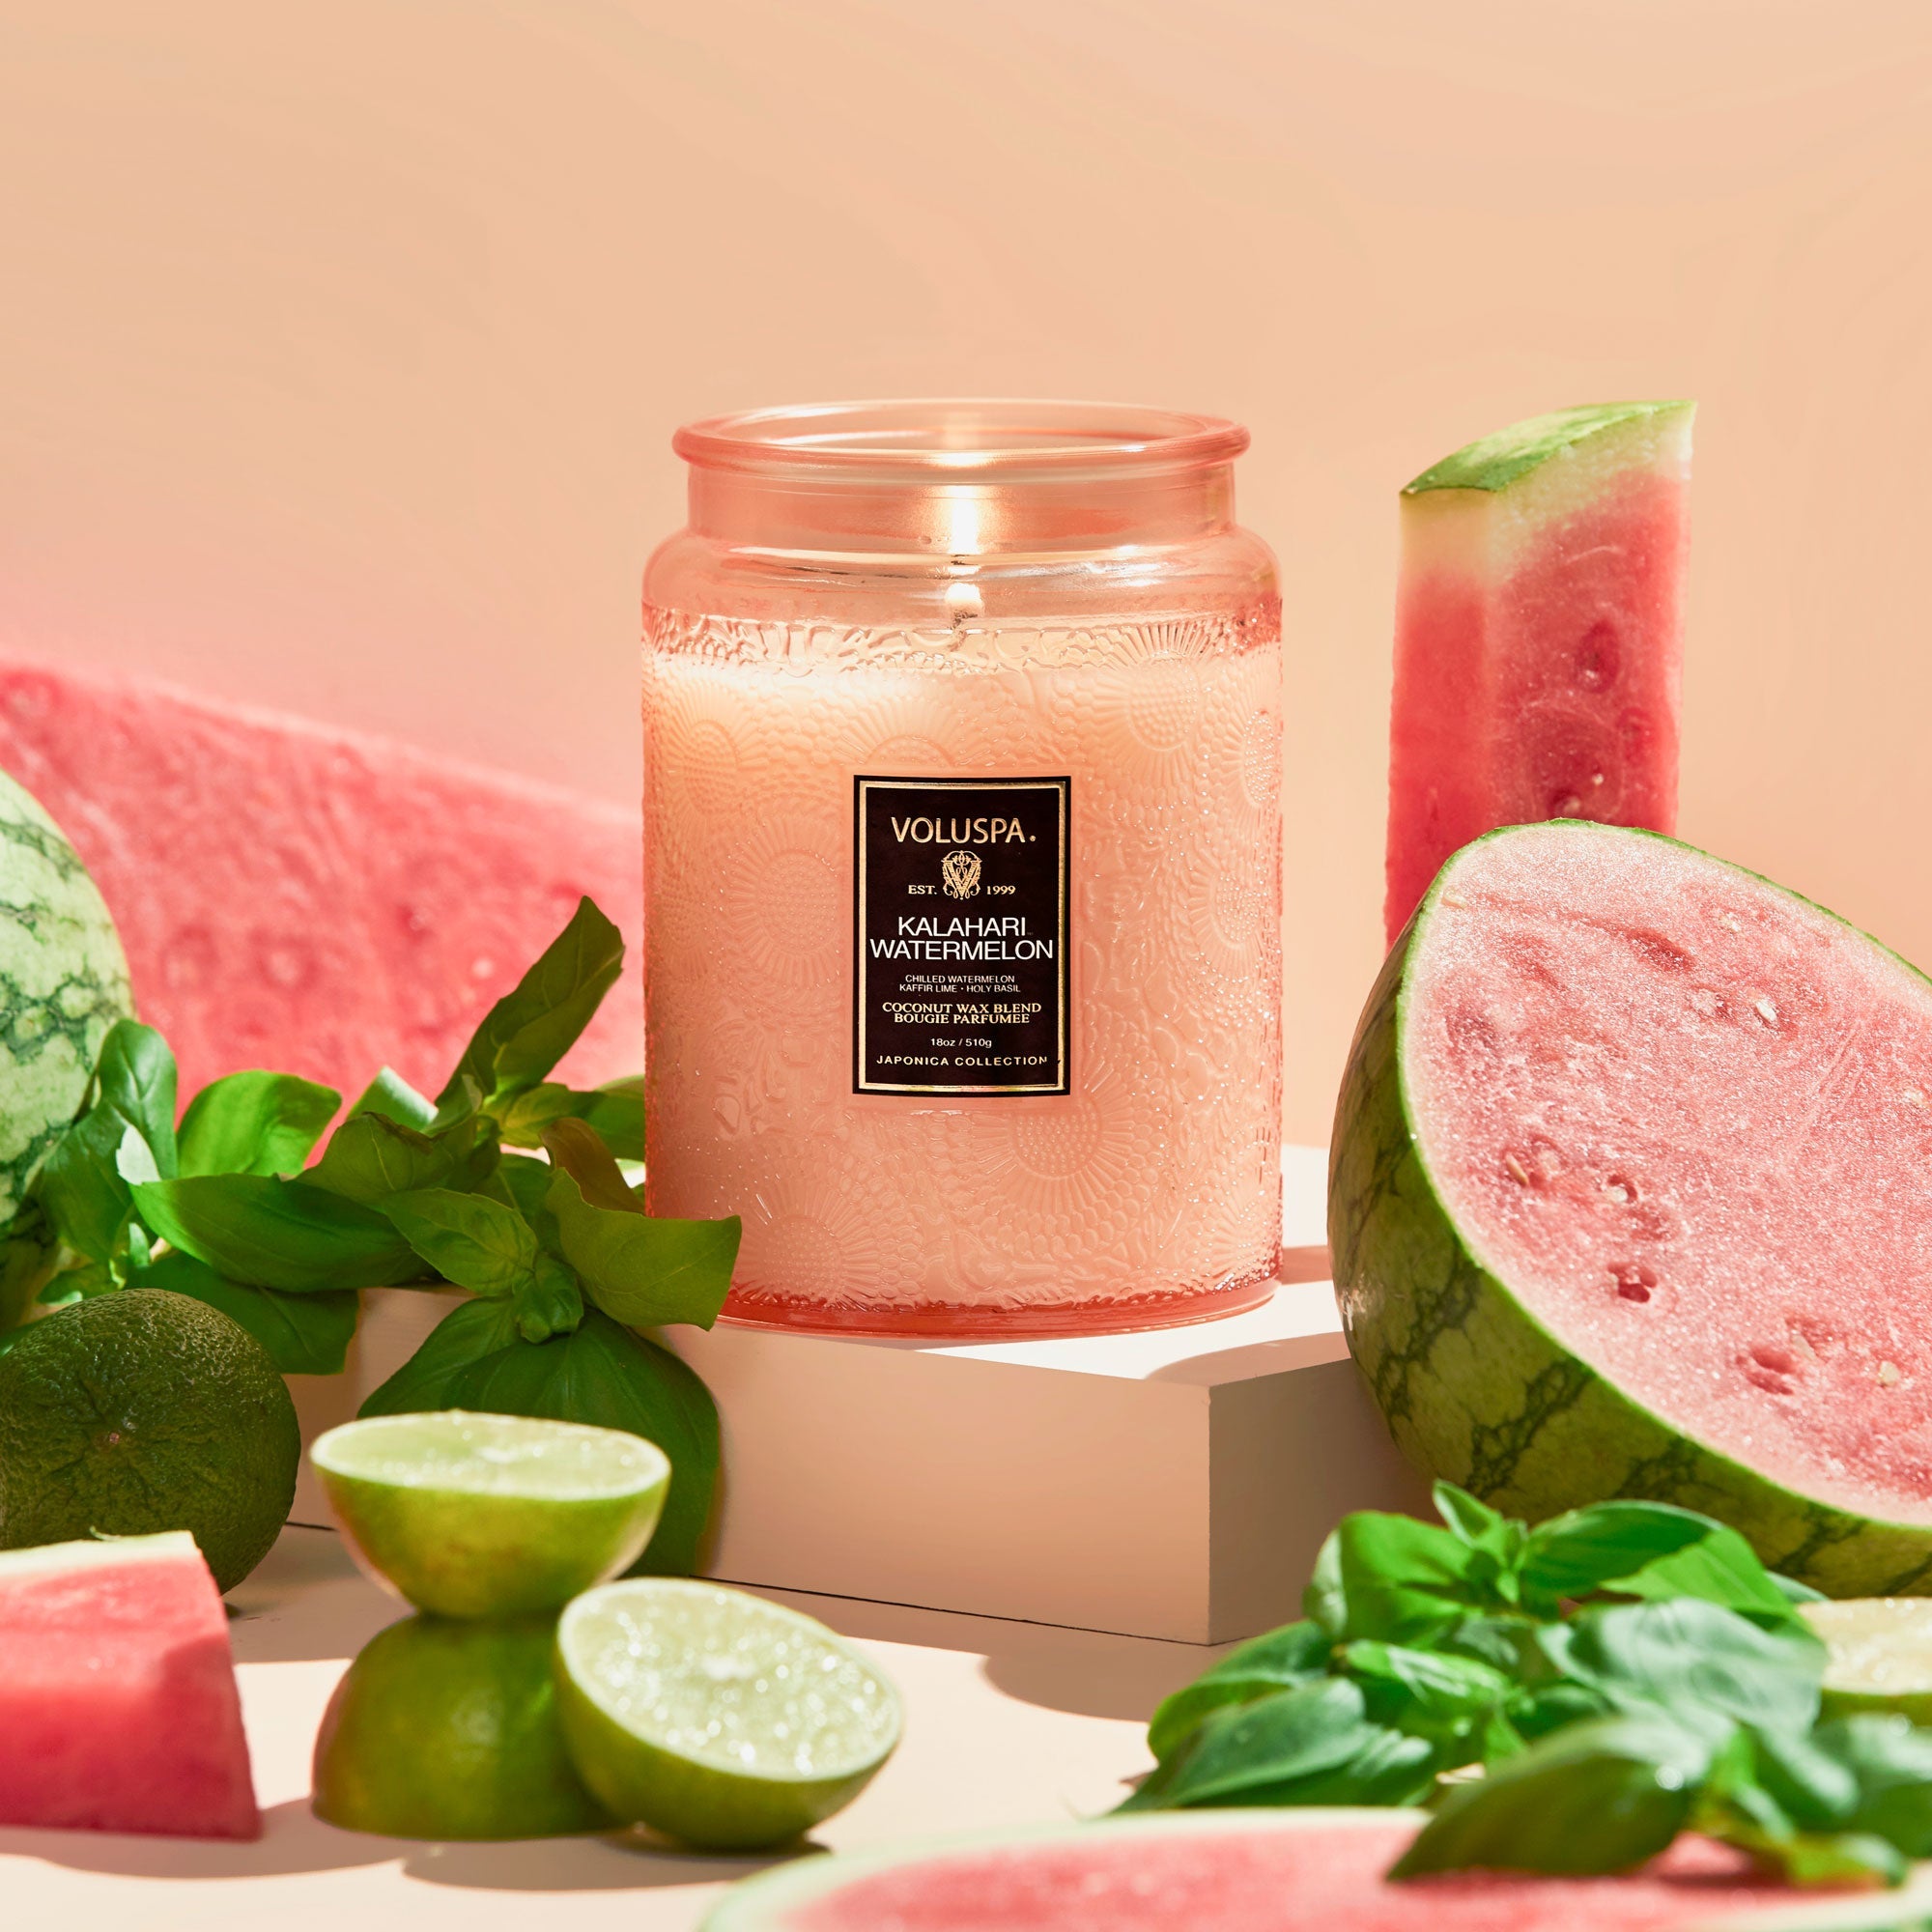 Kalahari Watermelon, Ultrasonic Diffuser Fragrance Oil